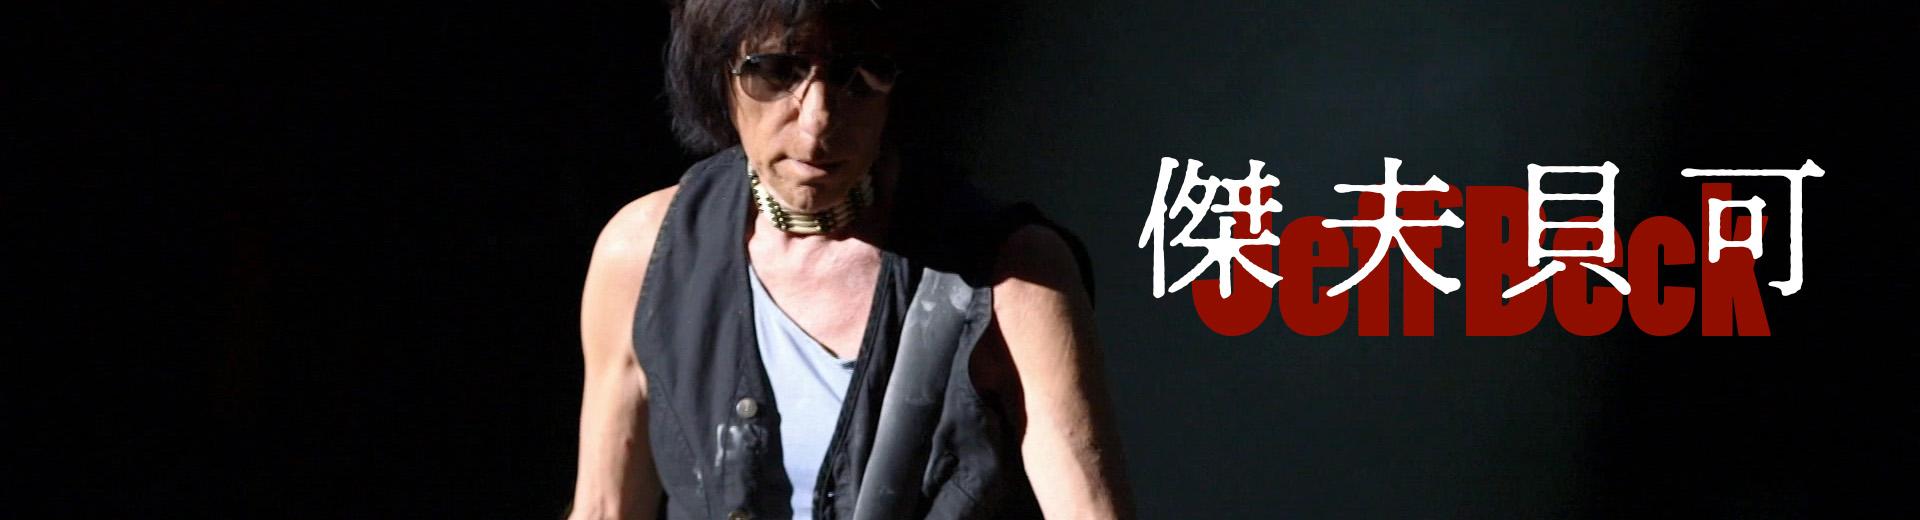 傑夫貝可—東京現場 Jeff Beck - Live in Tokyo